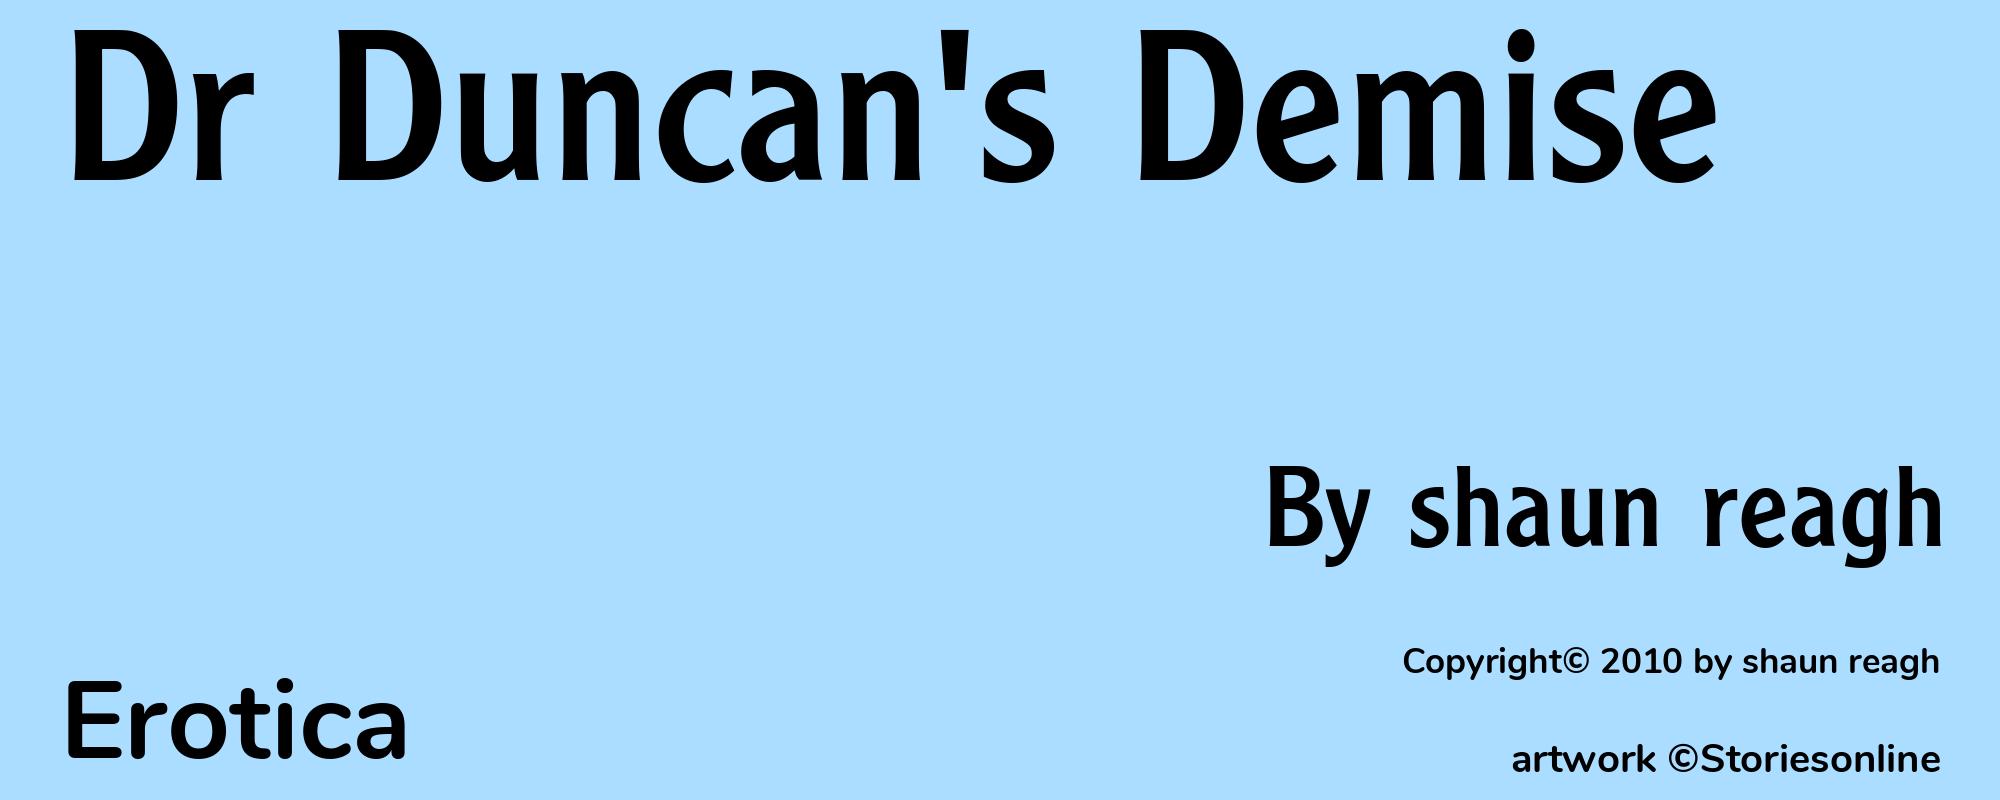 Dr Duncan's Demise - Cover